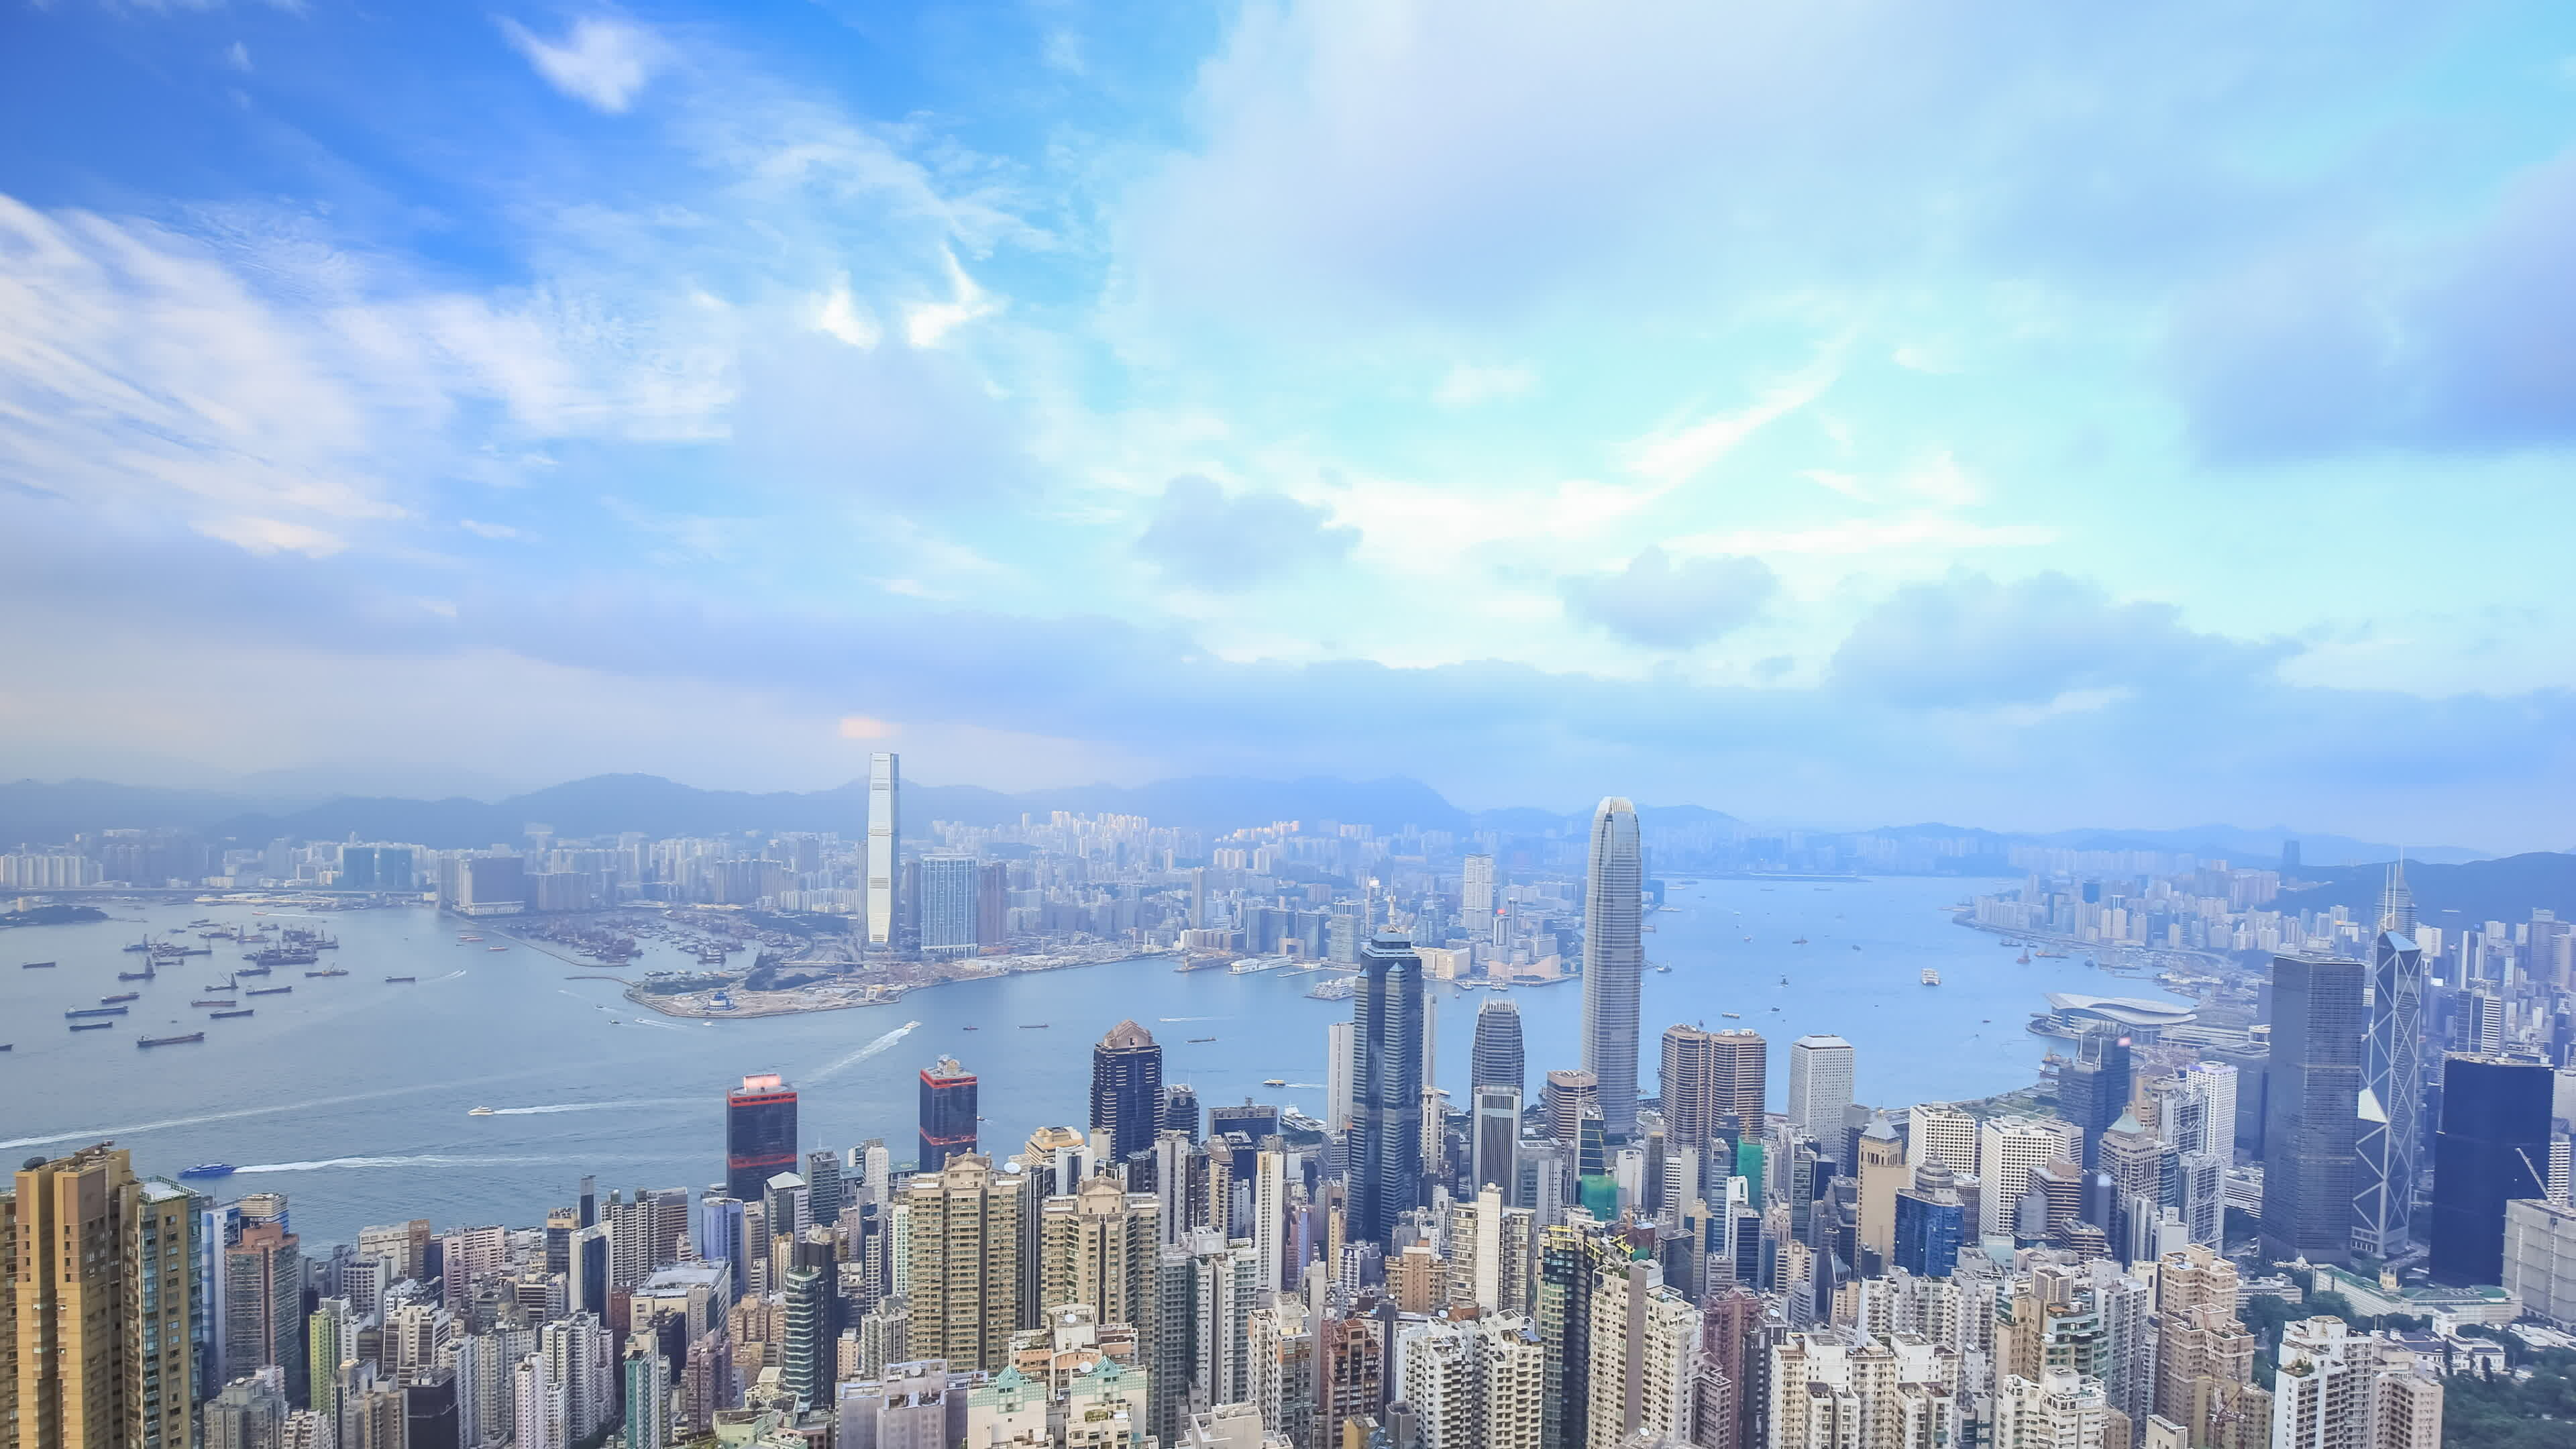 Hong Kong: The Peak, Cityline, Buildings, Water resources. 3840x2160 4K Wallpaper.